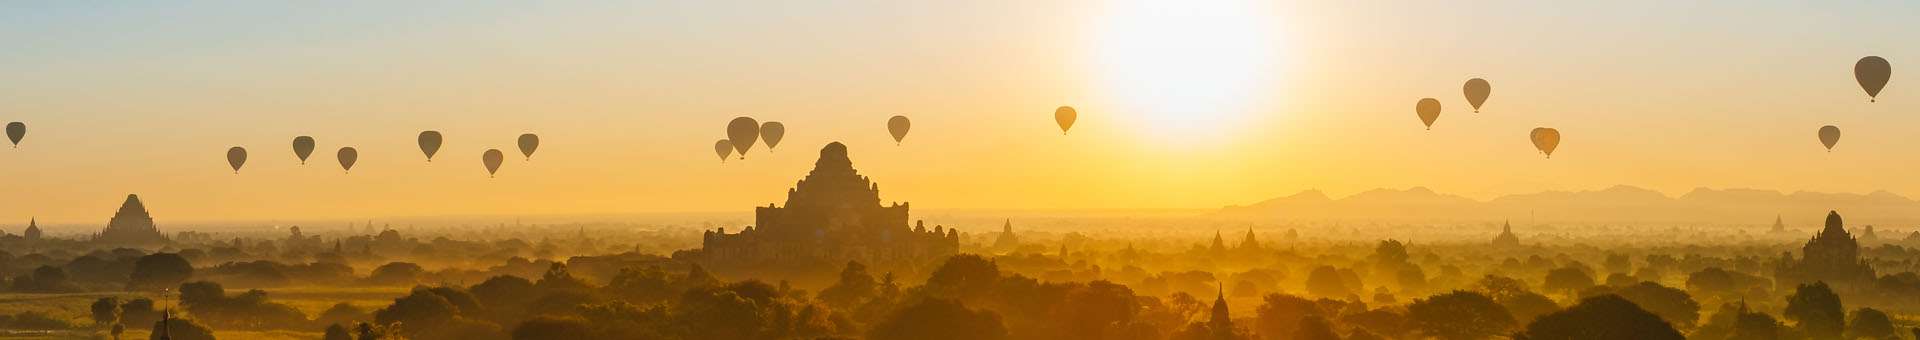 Myanmar Trademark Search & Registration